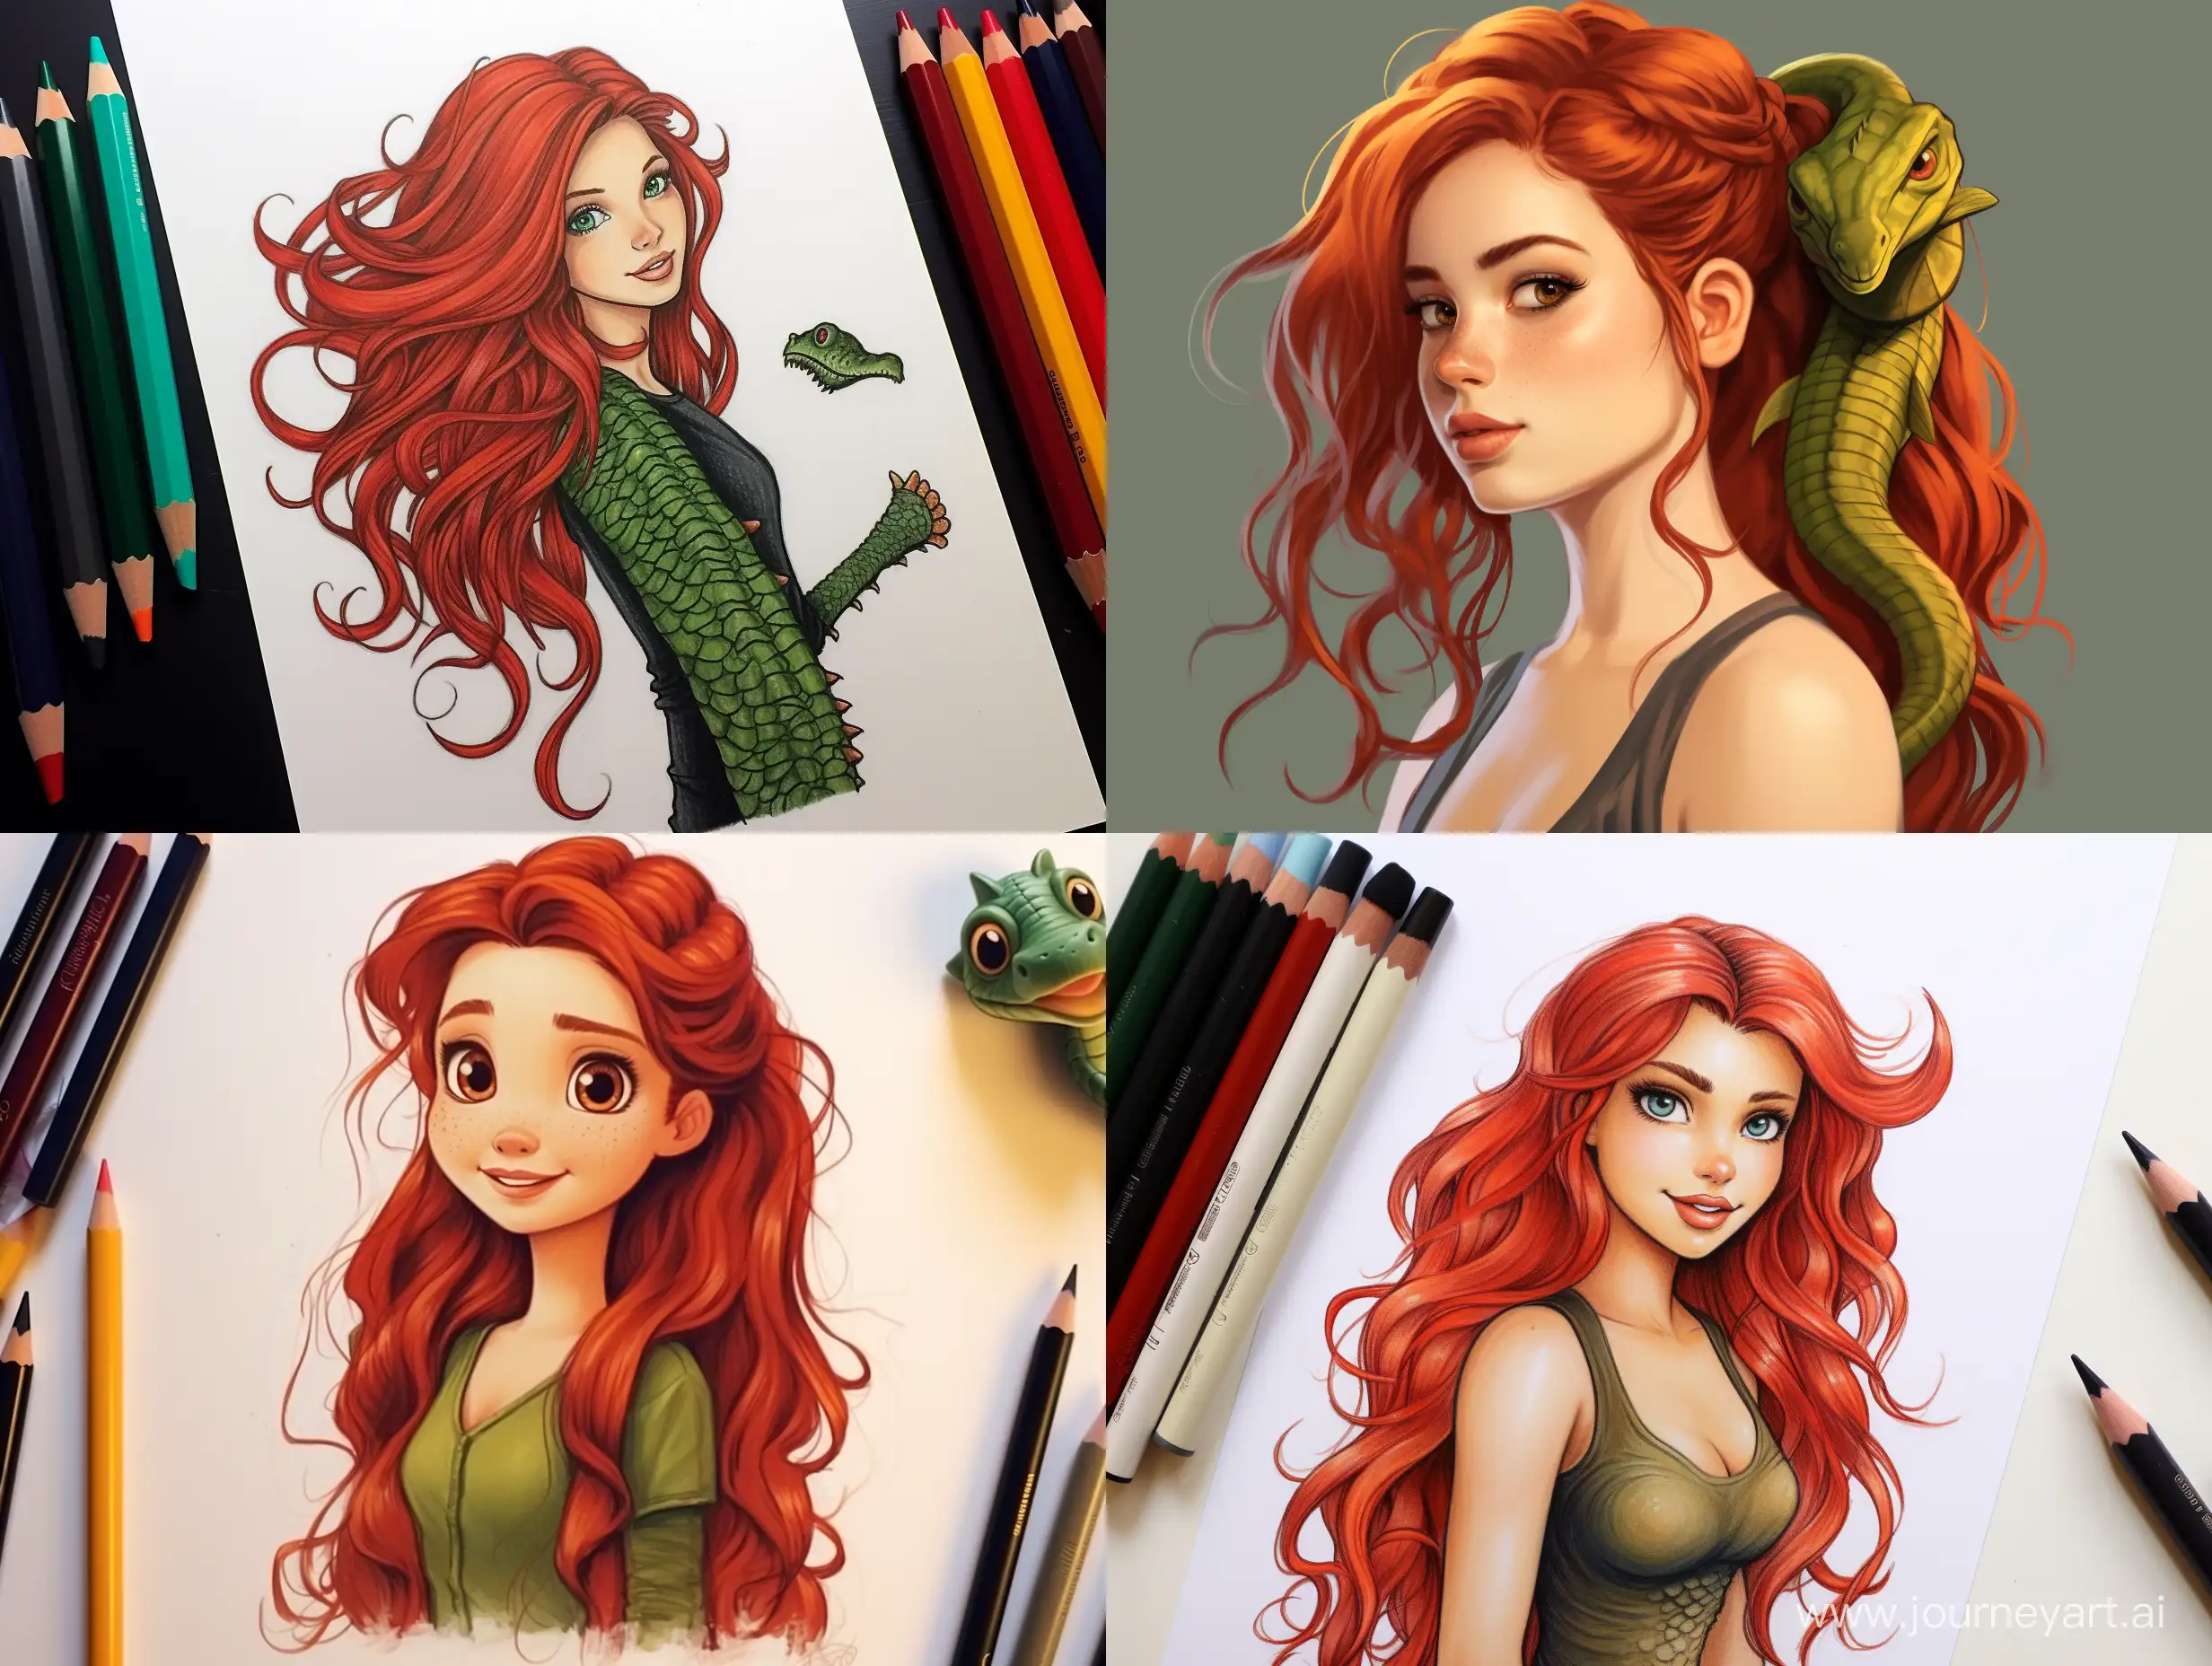 Enchanting-Thin-Crocodile-Girl-with-Lush-Red-Hair-Artistic-43-Portrait